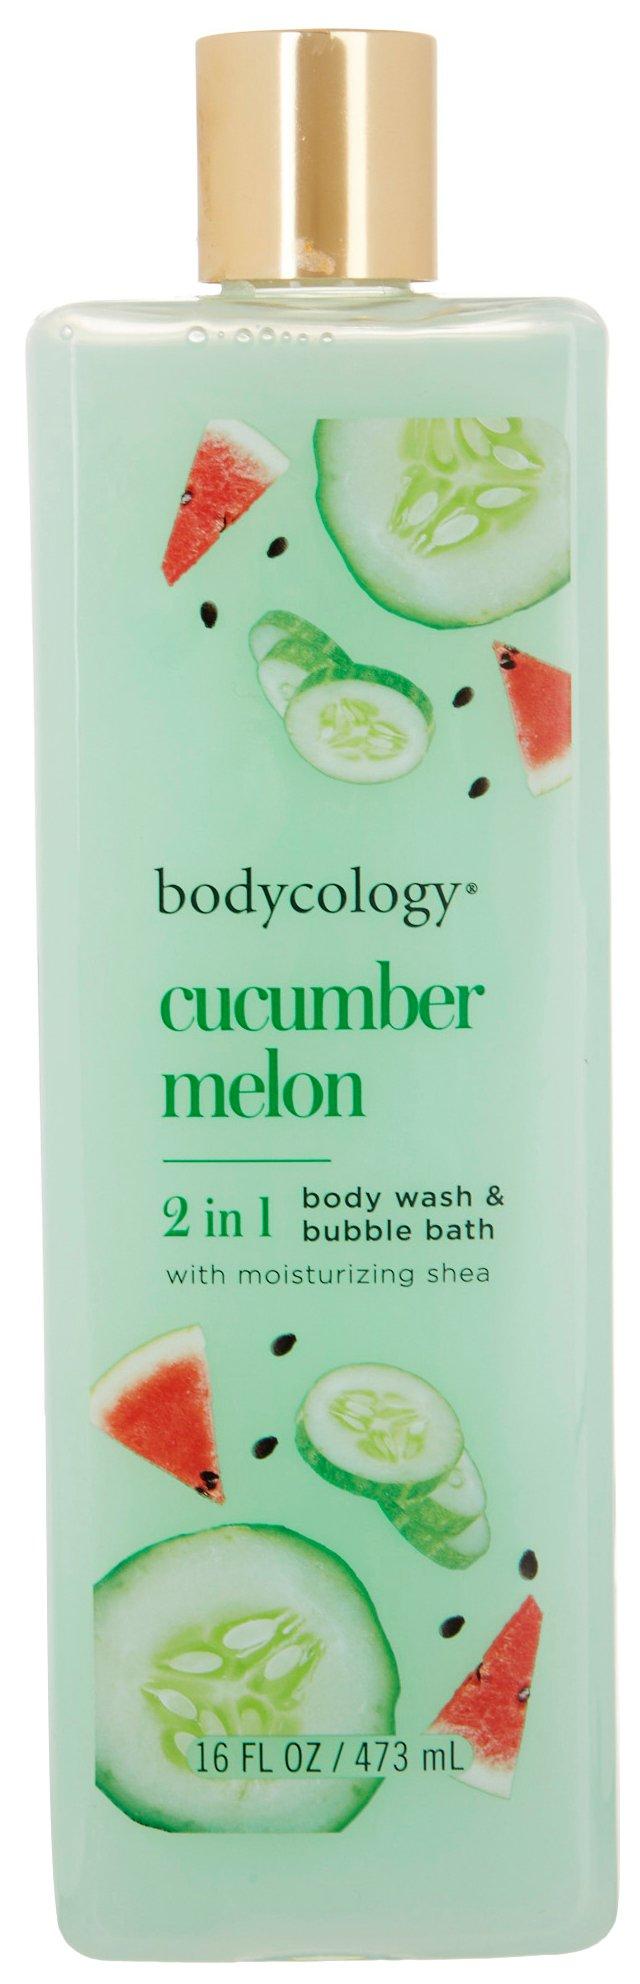 Bodycology Cucumber Melon Body Wash & Bubble Bath 16 oz.